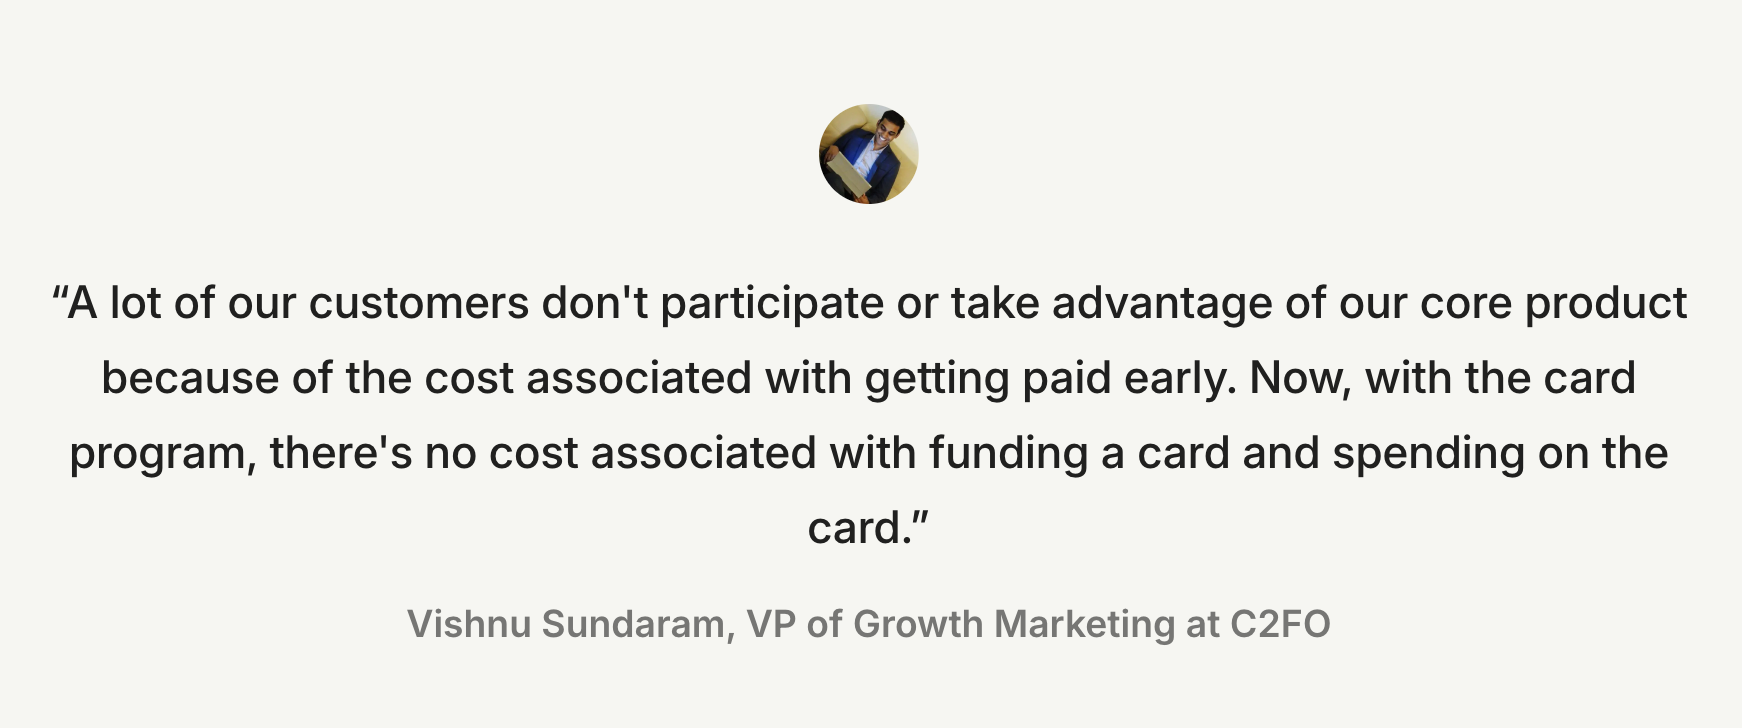 A quote from Vishnu Sundaram, VP of Growth Marketing at C2FO